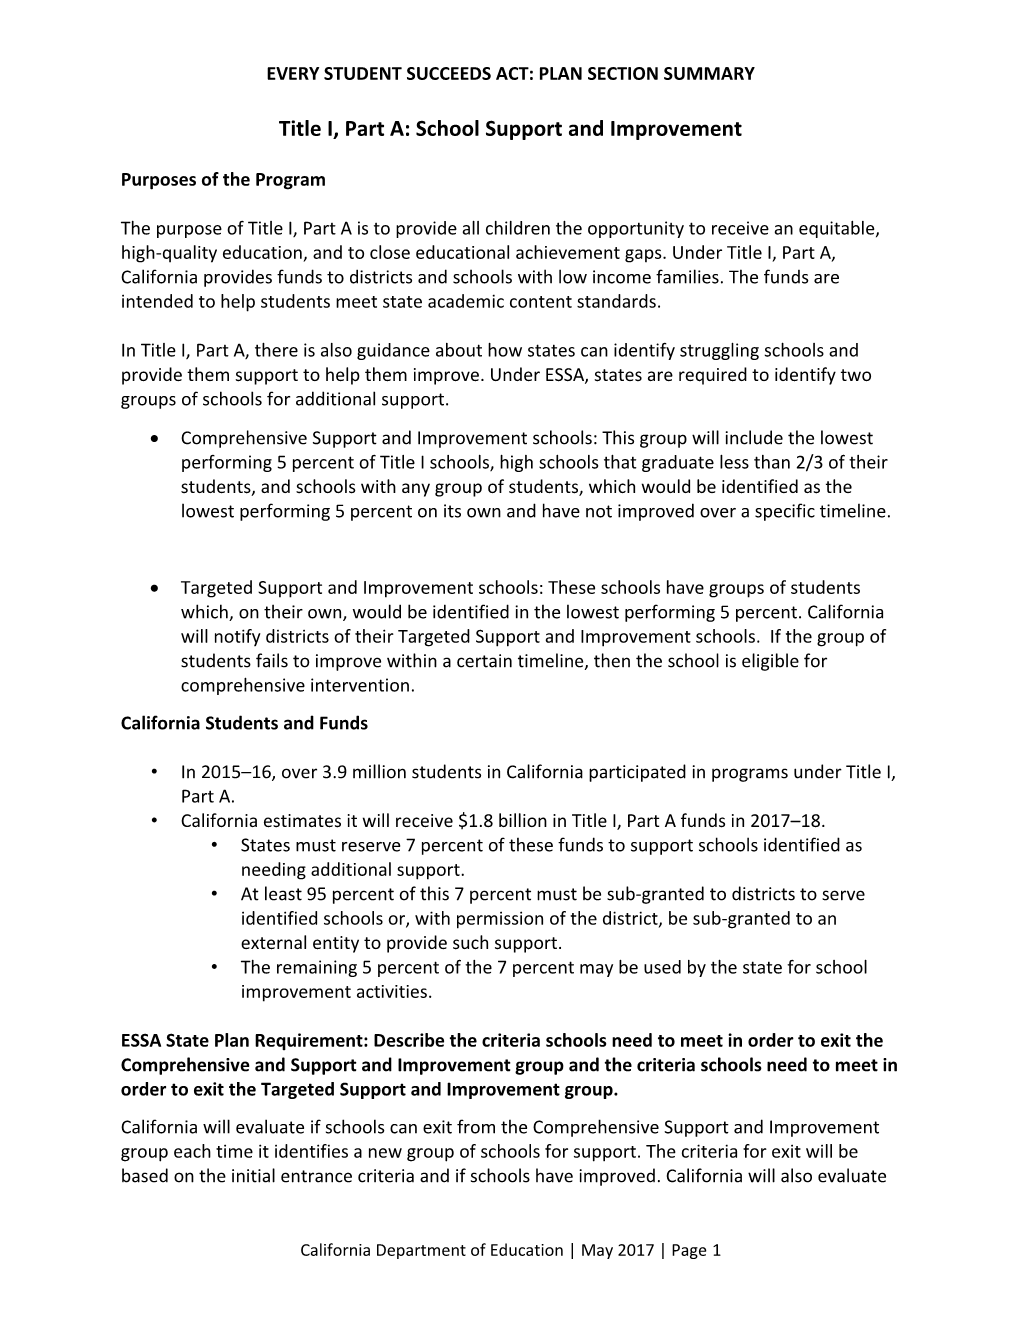 School Support Draft Section Summary - ESSA (CA Dept of Education)